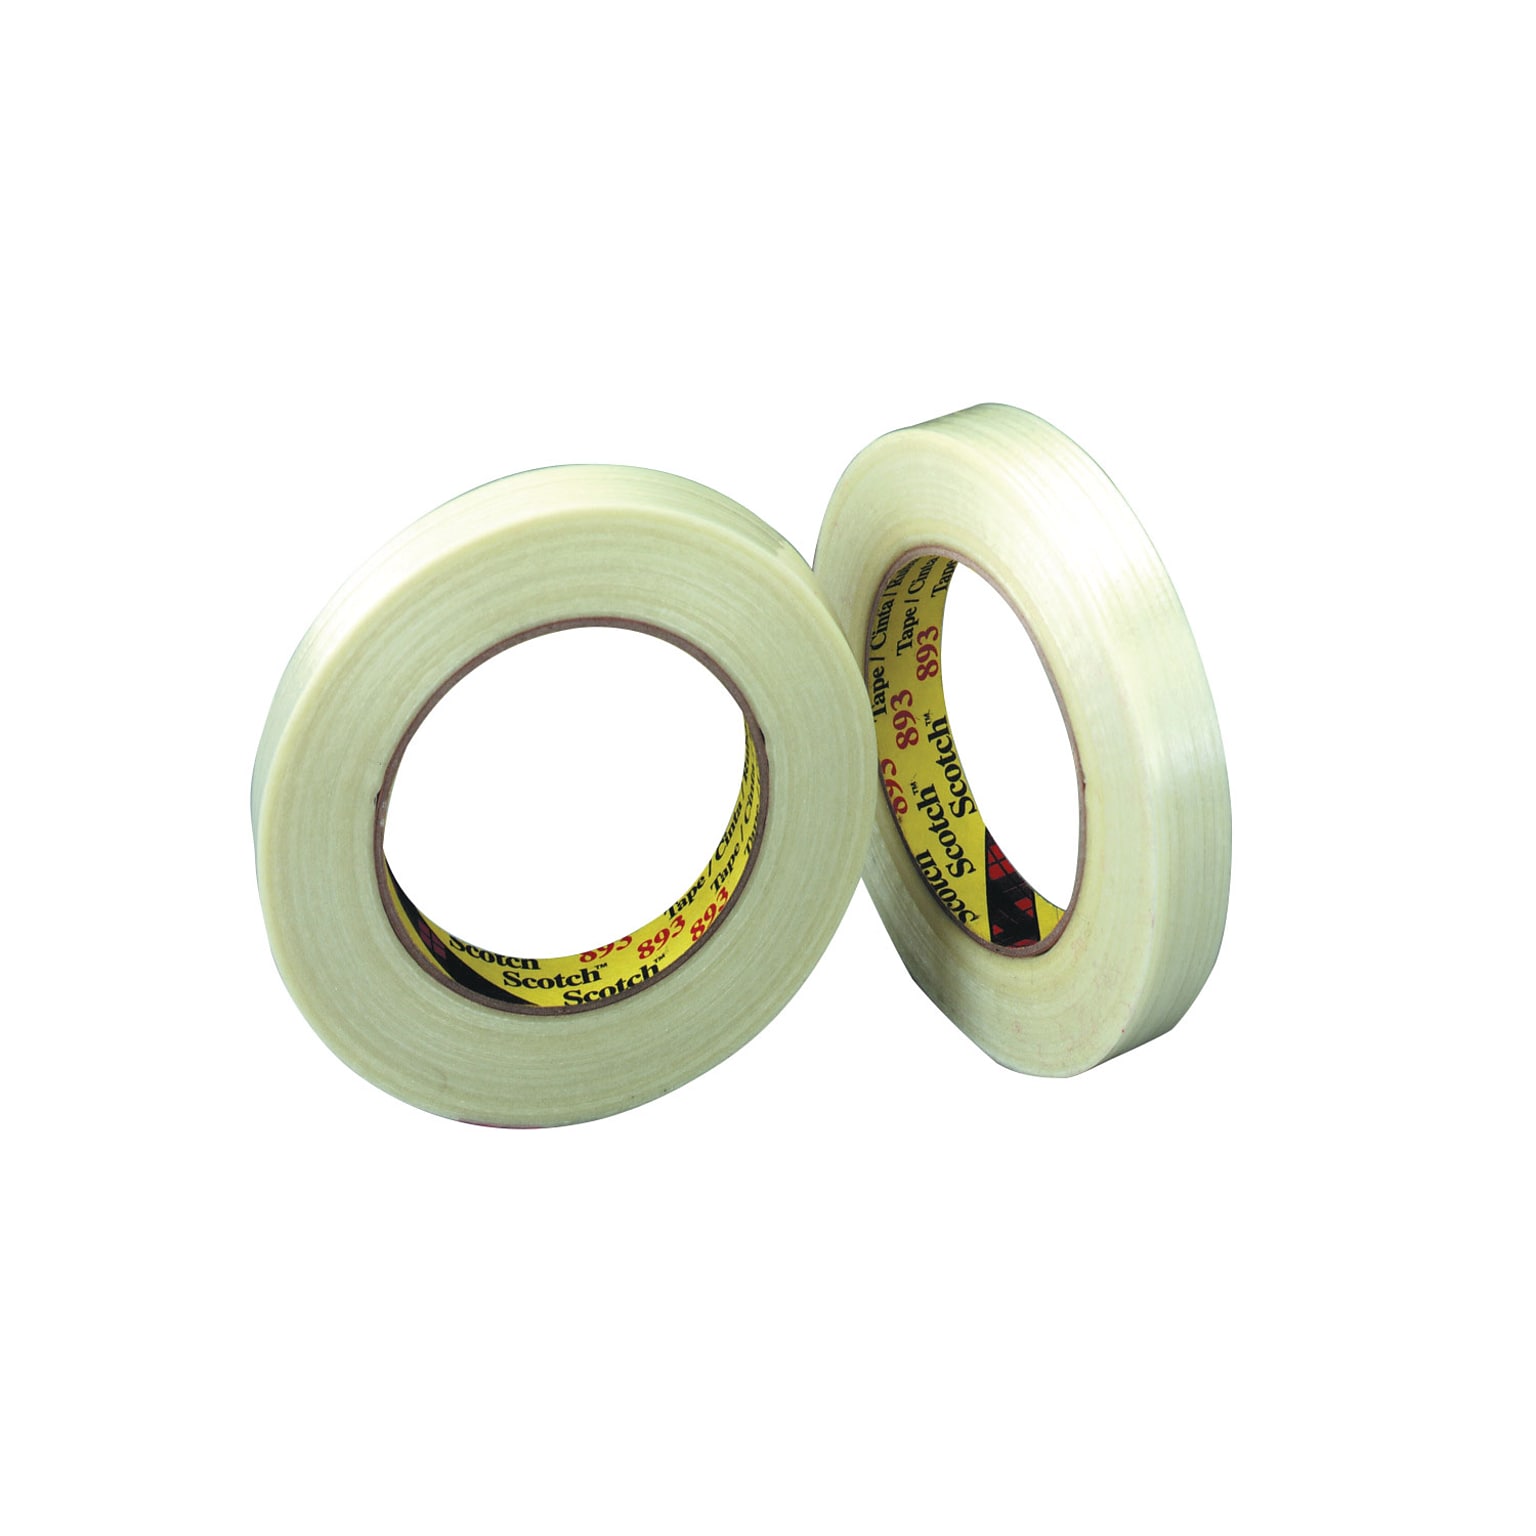 Scotch® Filament Tape 893 Clear, 18 mm x 55 m, 1/Roll (893-18)